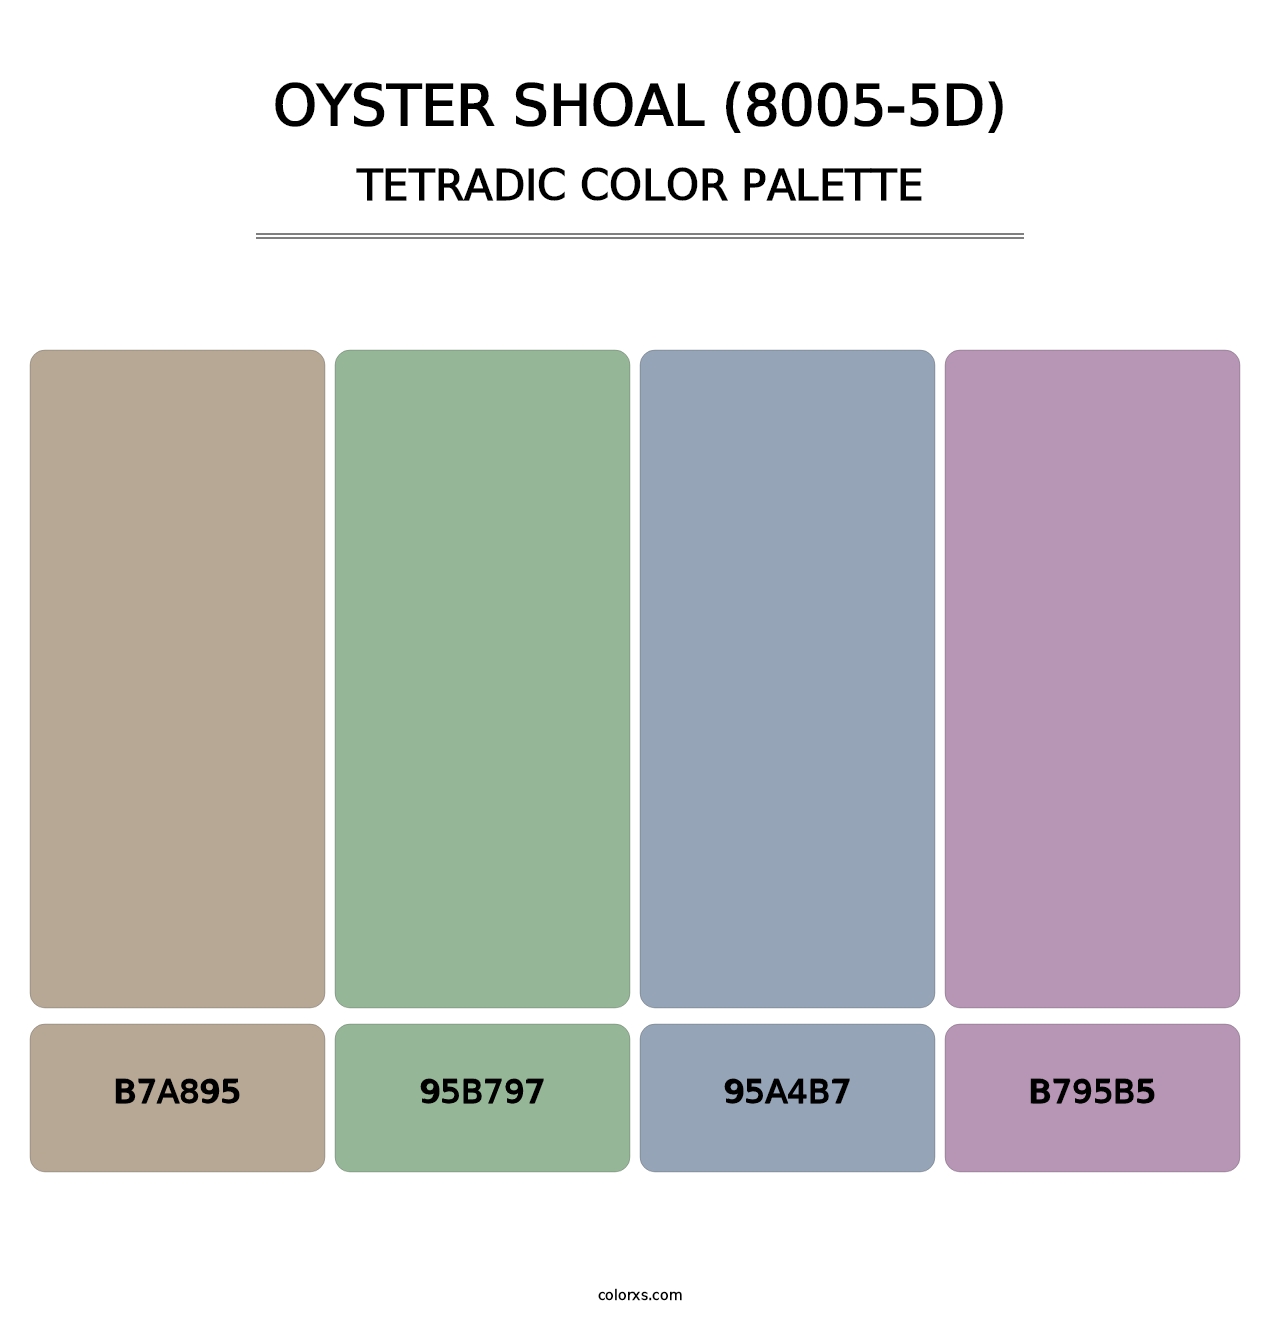 Oyster Shoal (8005-5D) - Tetradic Color Palette